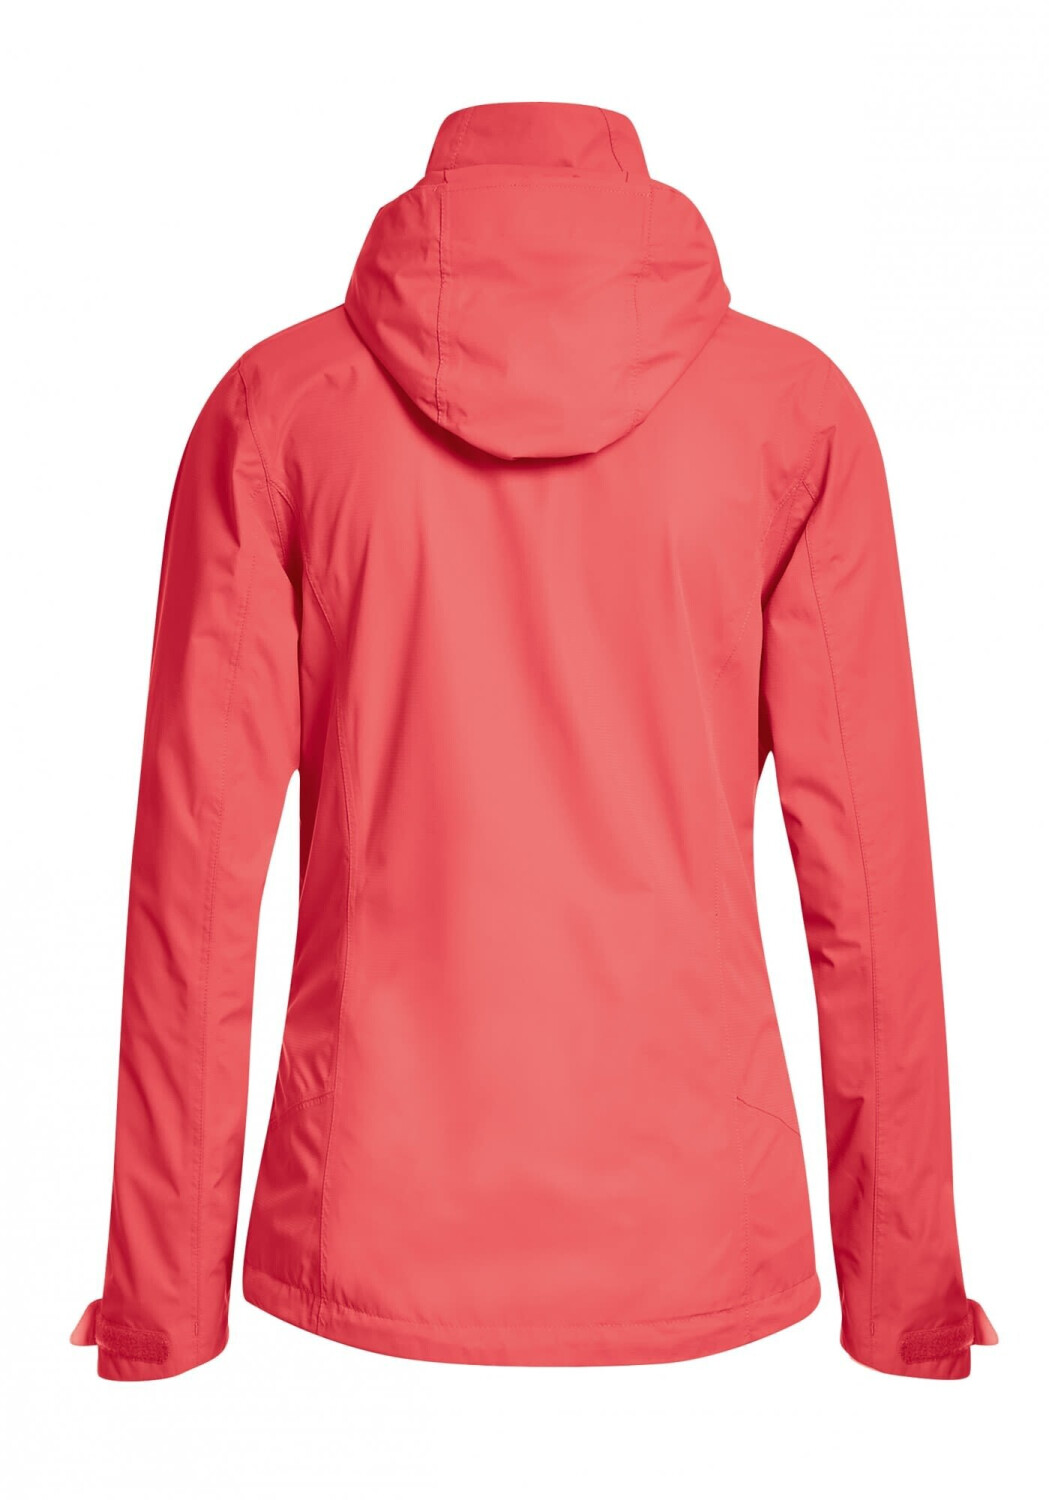 pink | bei Women 99,90 Preisvergleich Metor € ab Sports Maier paradise Jacket